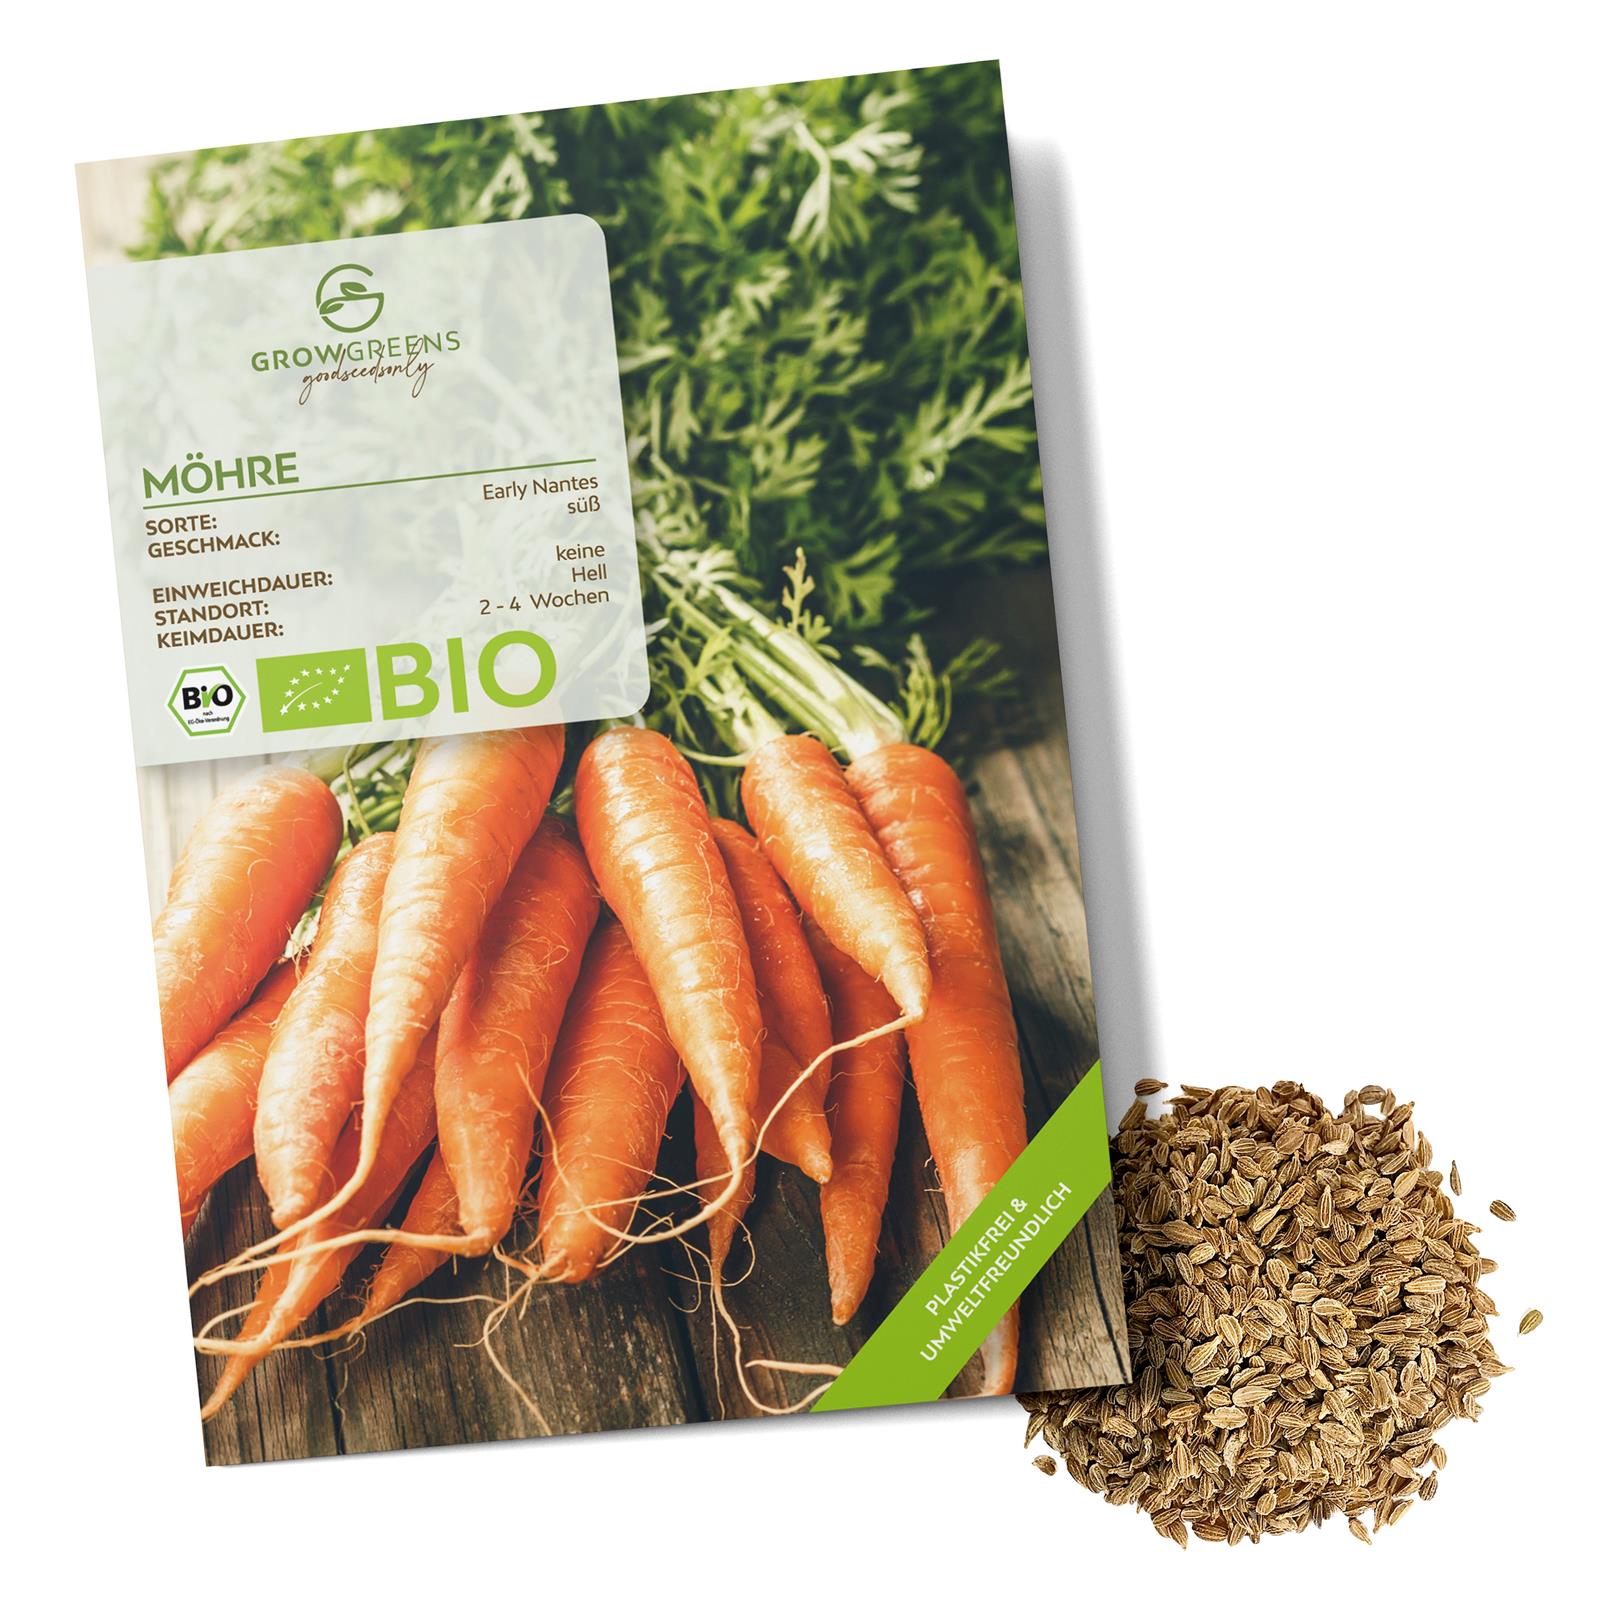 BIO Karotten Samen (Early Nantes) - Möhren Saatgut aus biologischem Anbau (500 Korn)